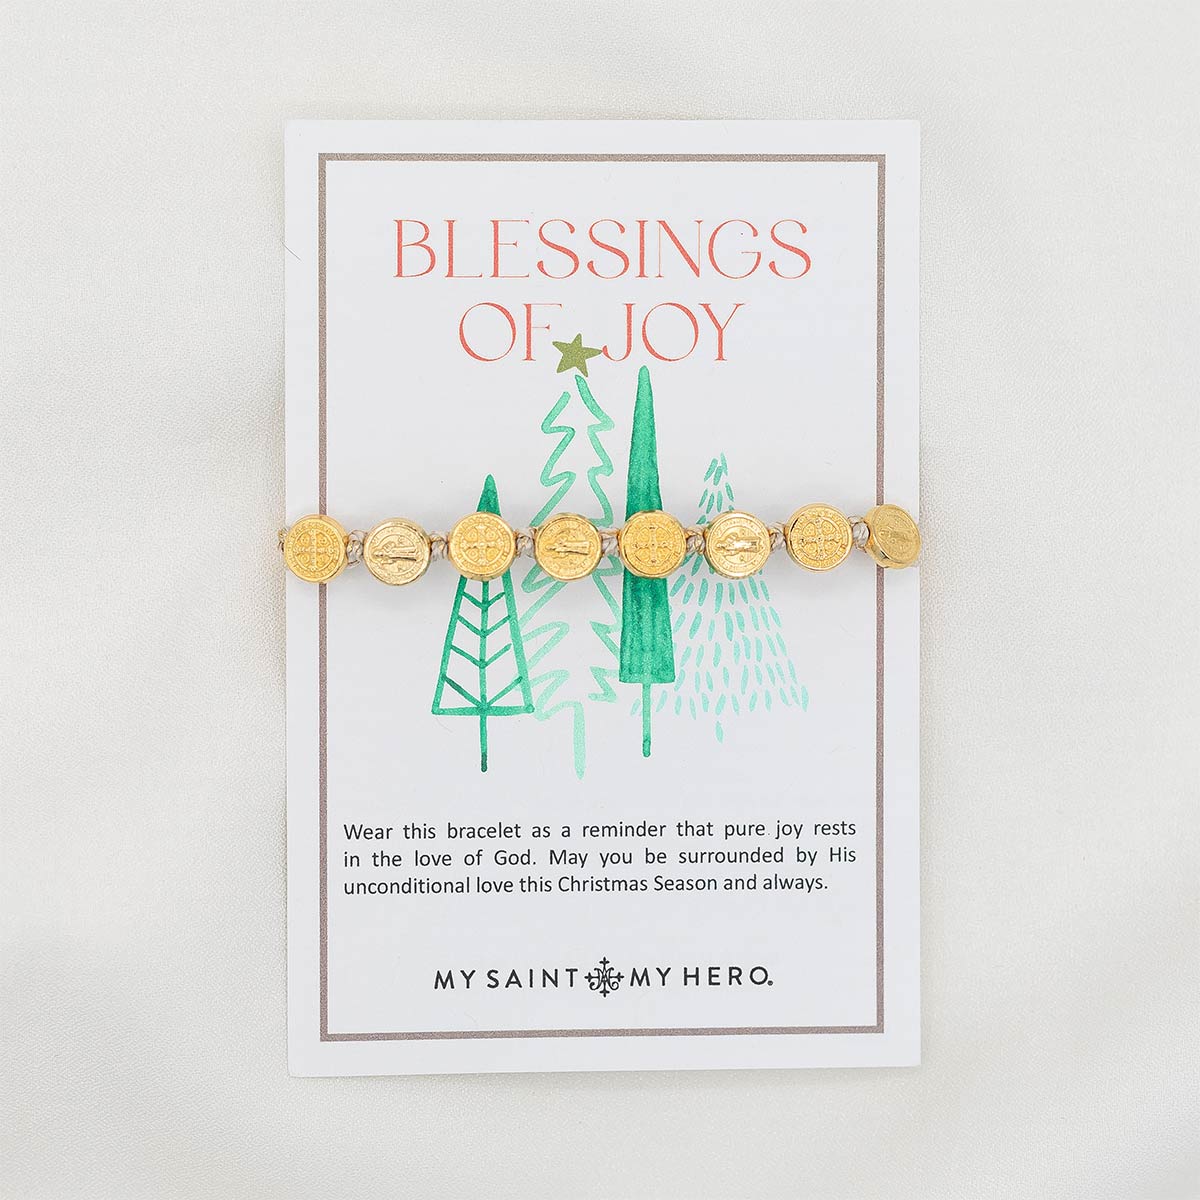 St. Benedict Blessing Bracelets - Catholic Jewelry – My Saint My Hero